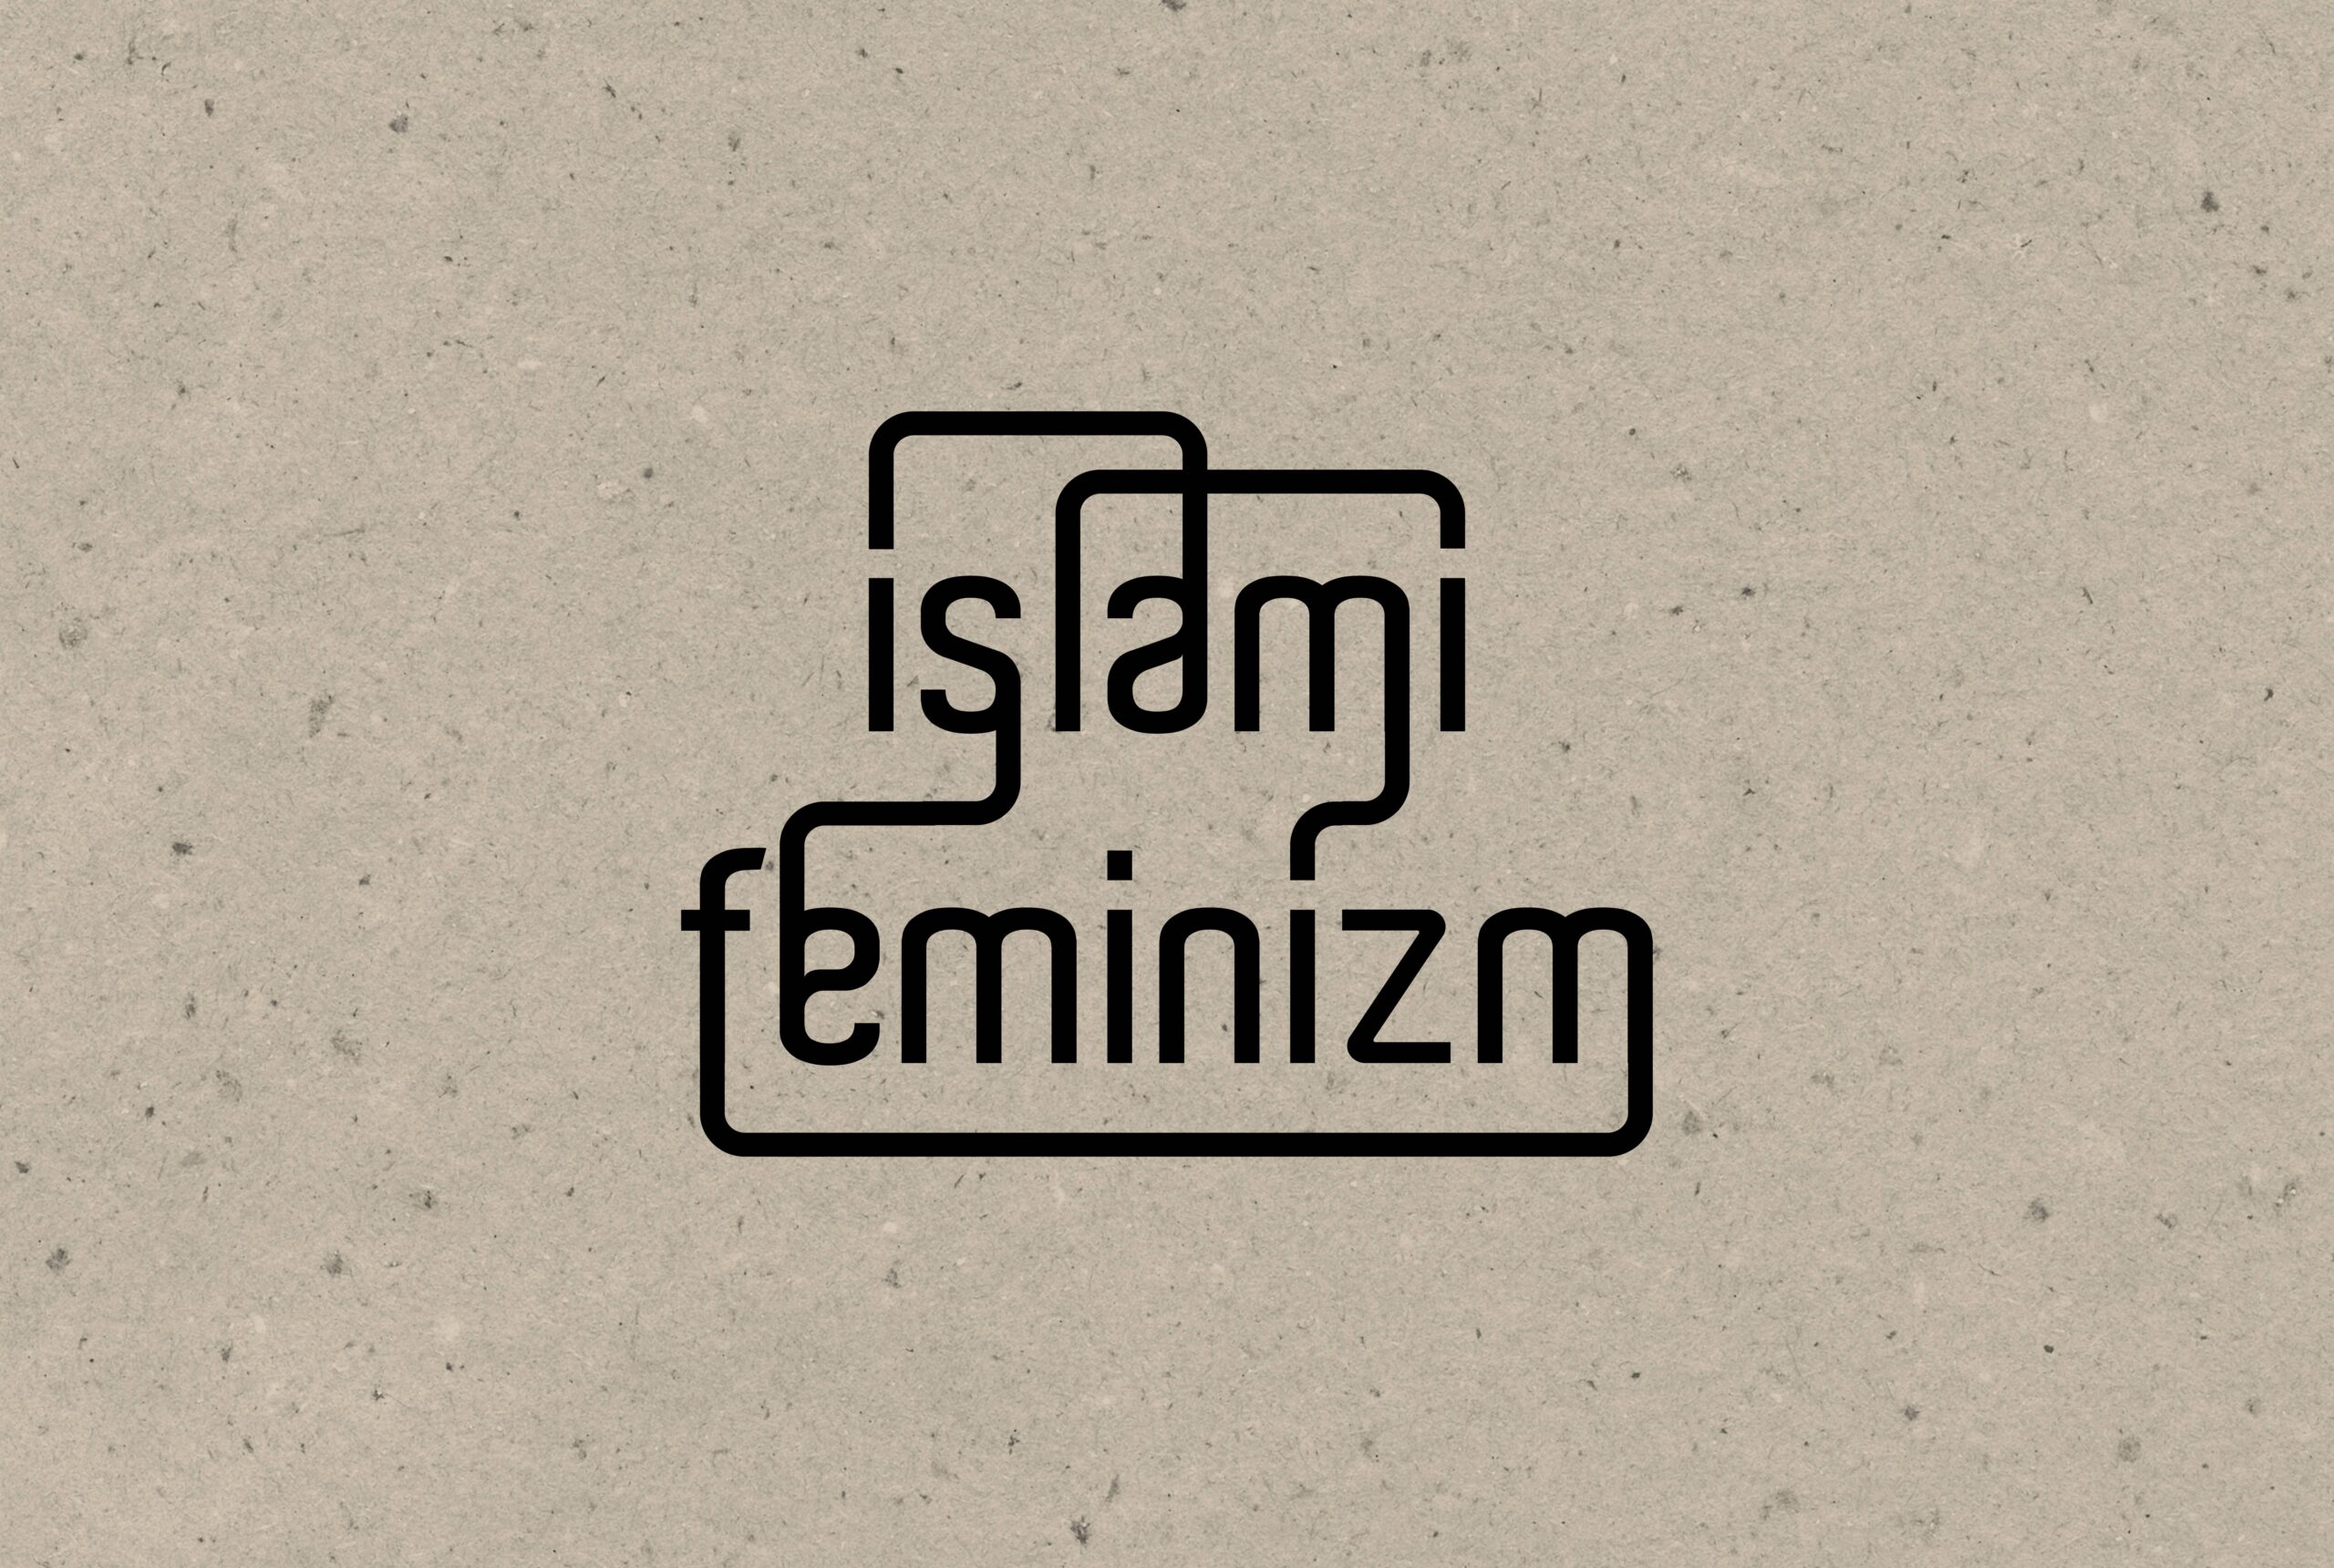 İslami Feminizm